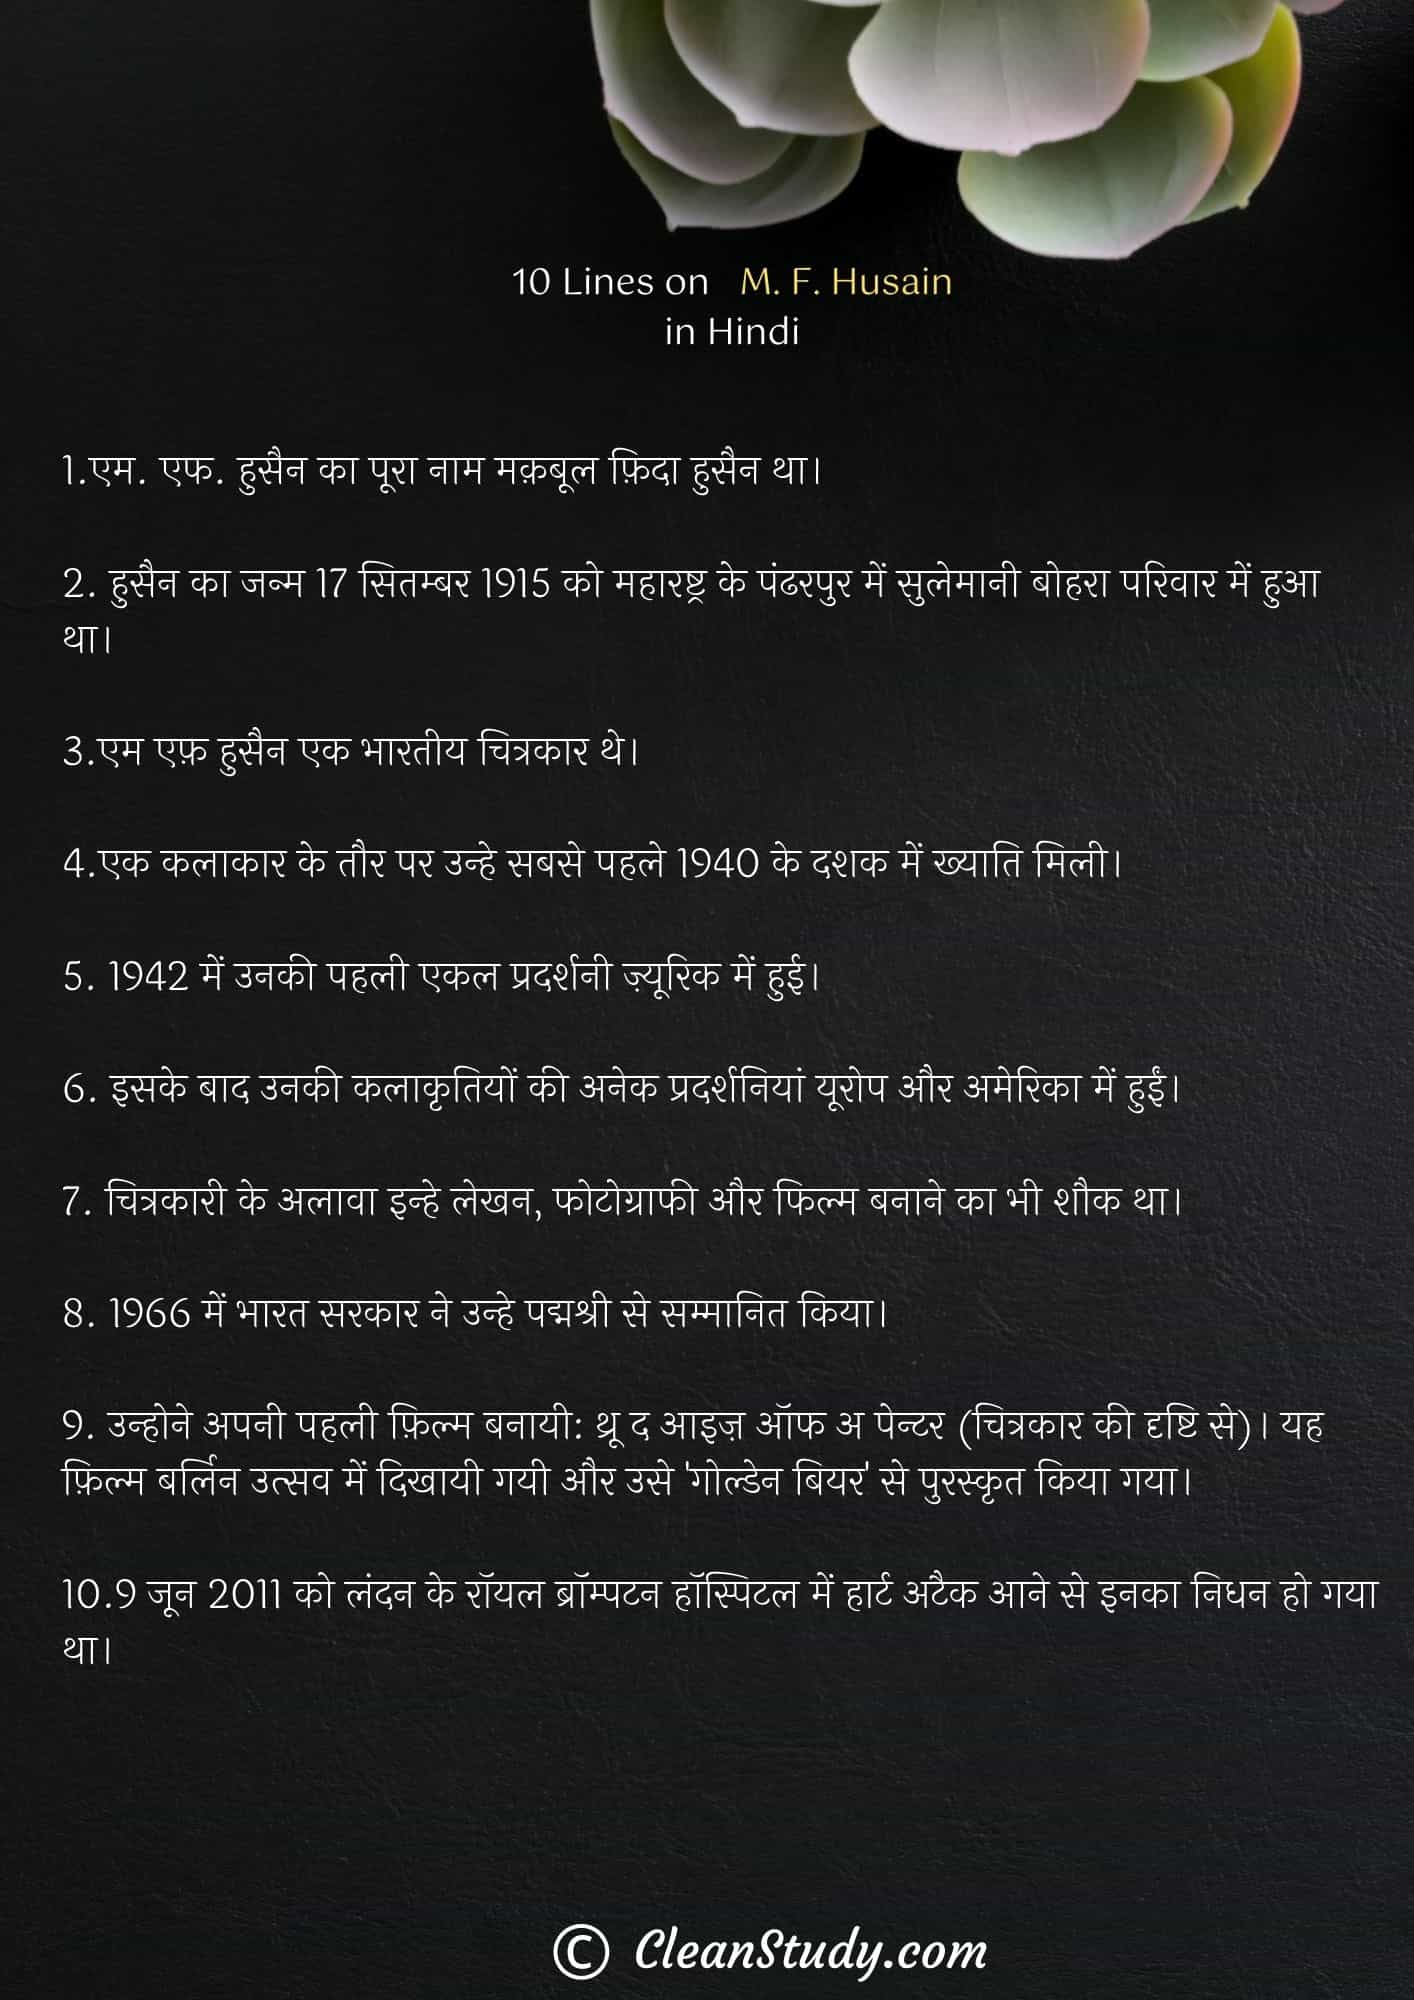 10 Lines on M. F. Husain in Hindi